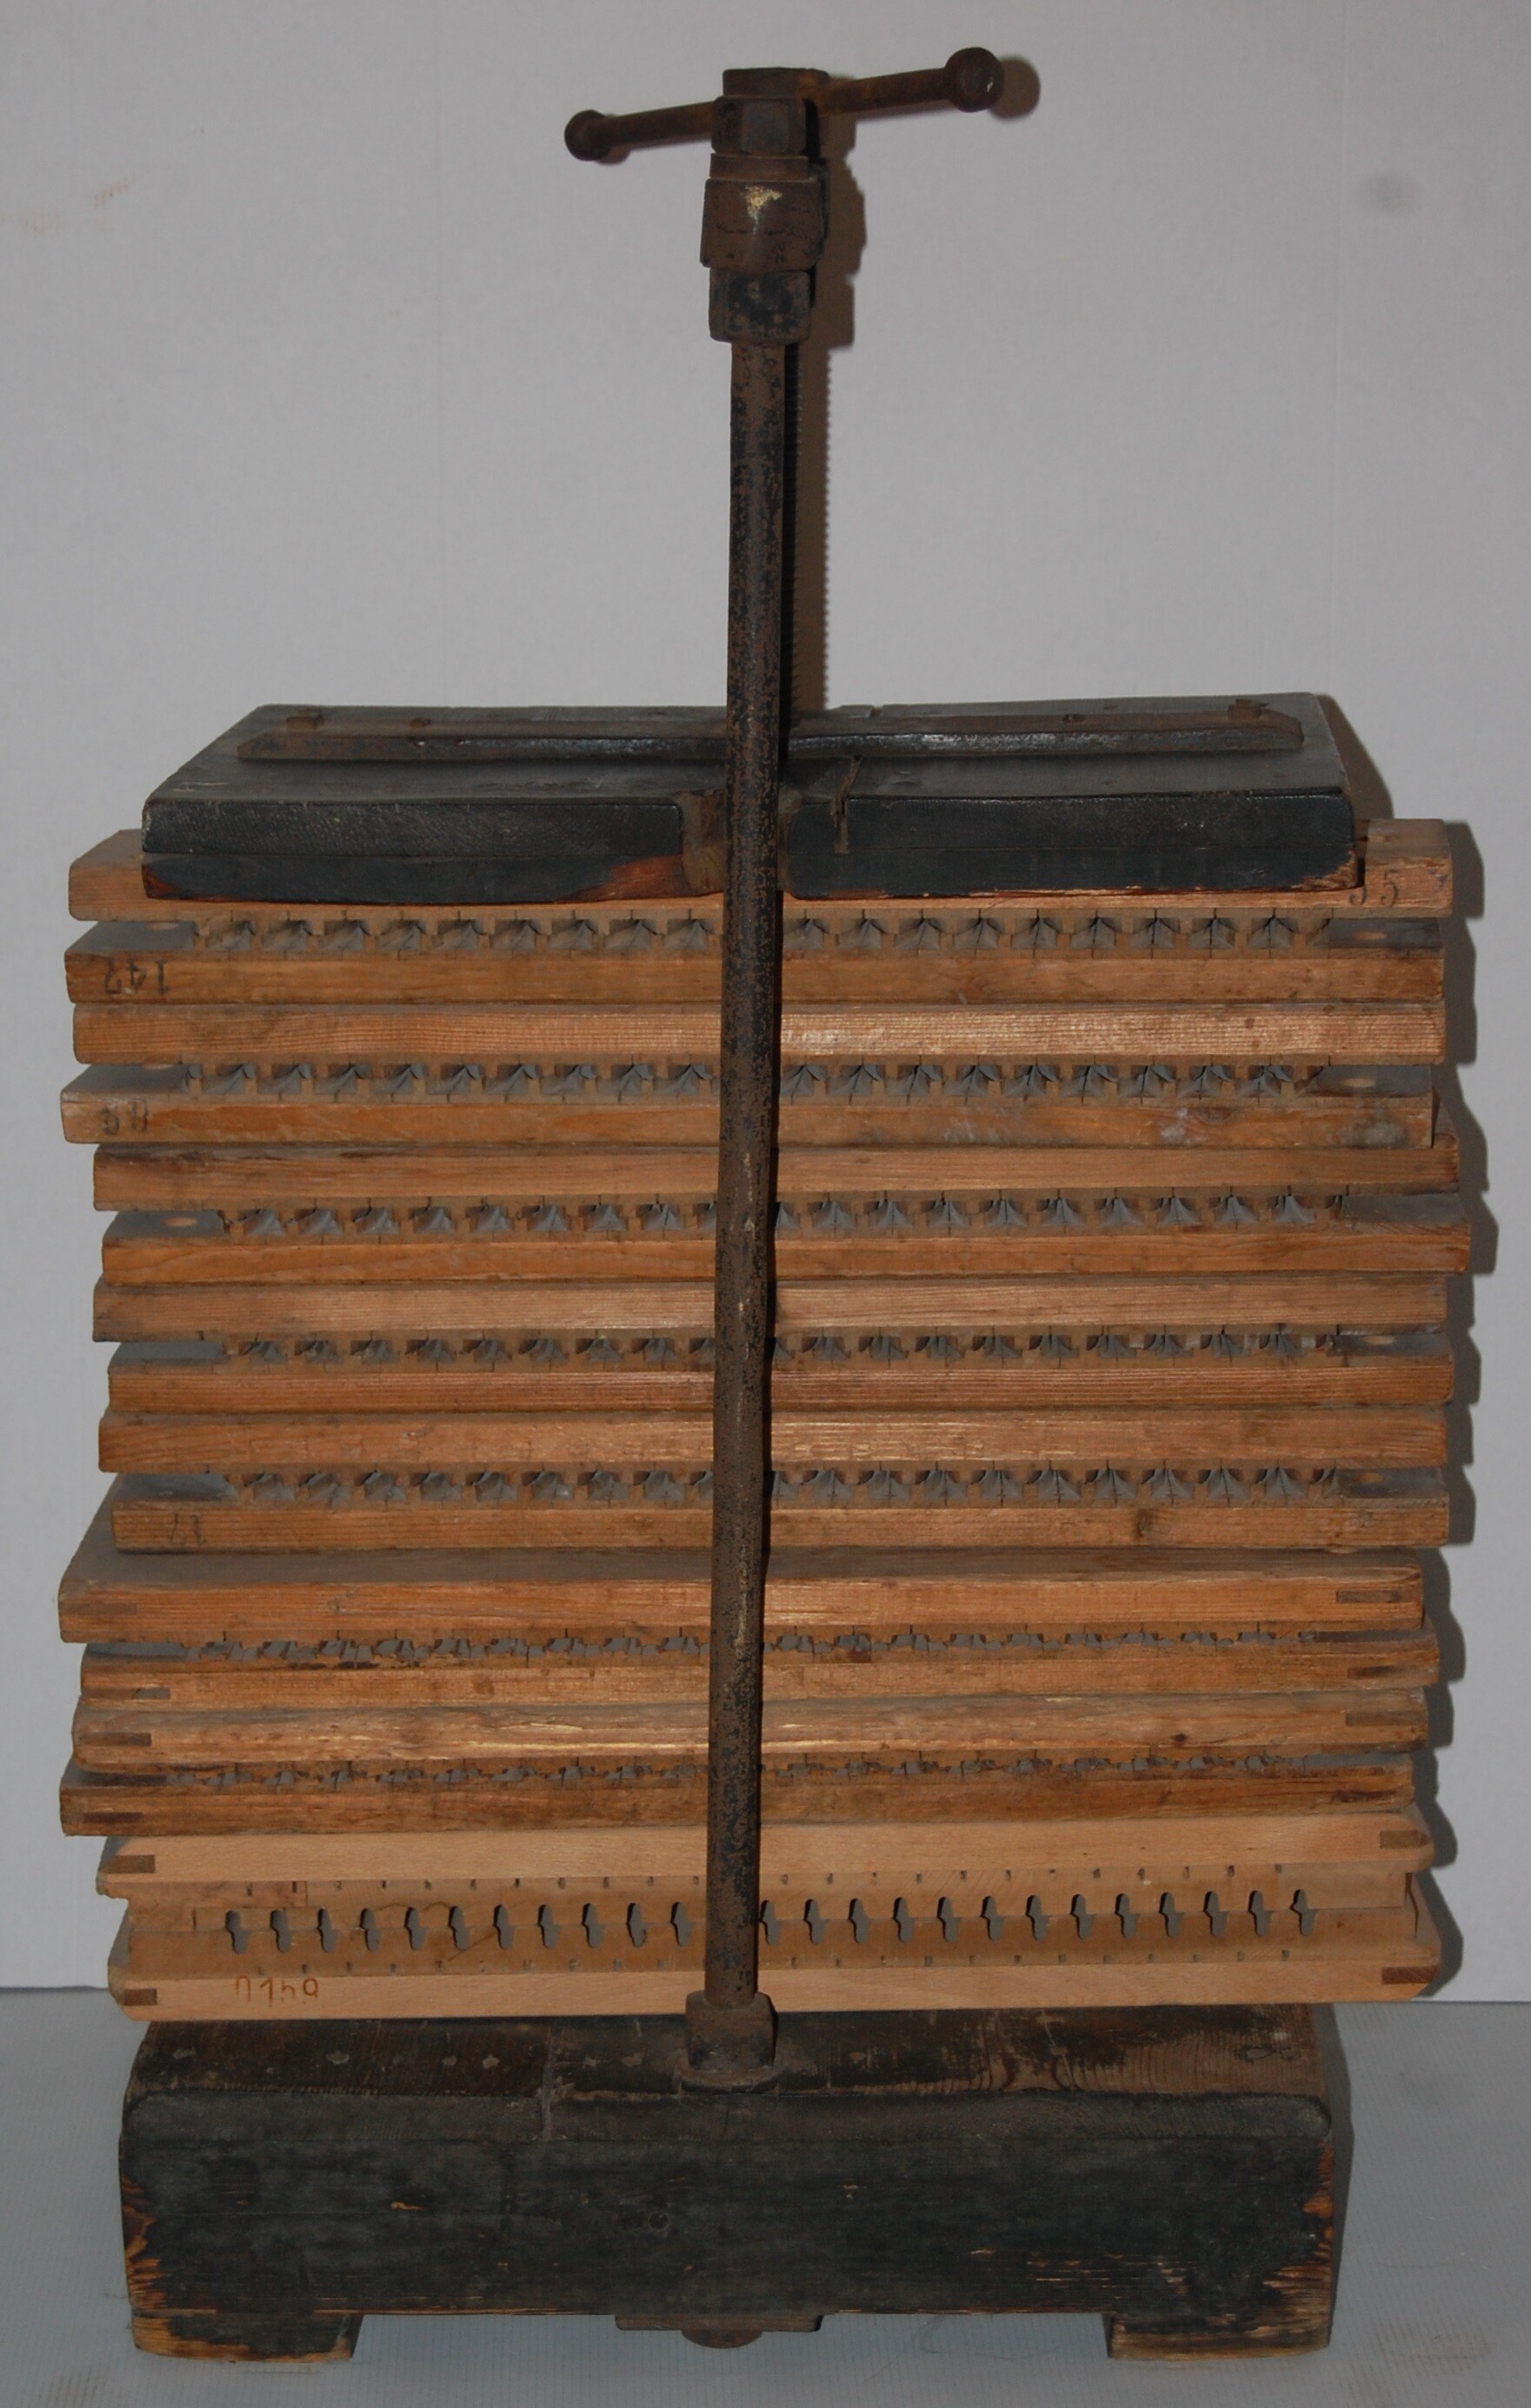 Zigarrenpresse mit Zigarrenformen (Museum Barockschloss Delitzsch CC BY-NC-SA)